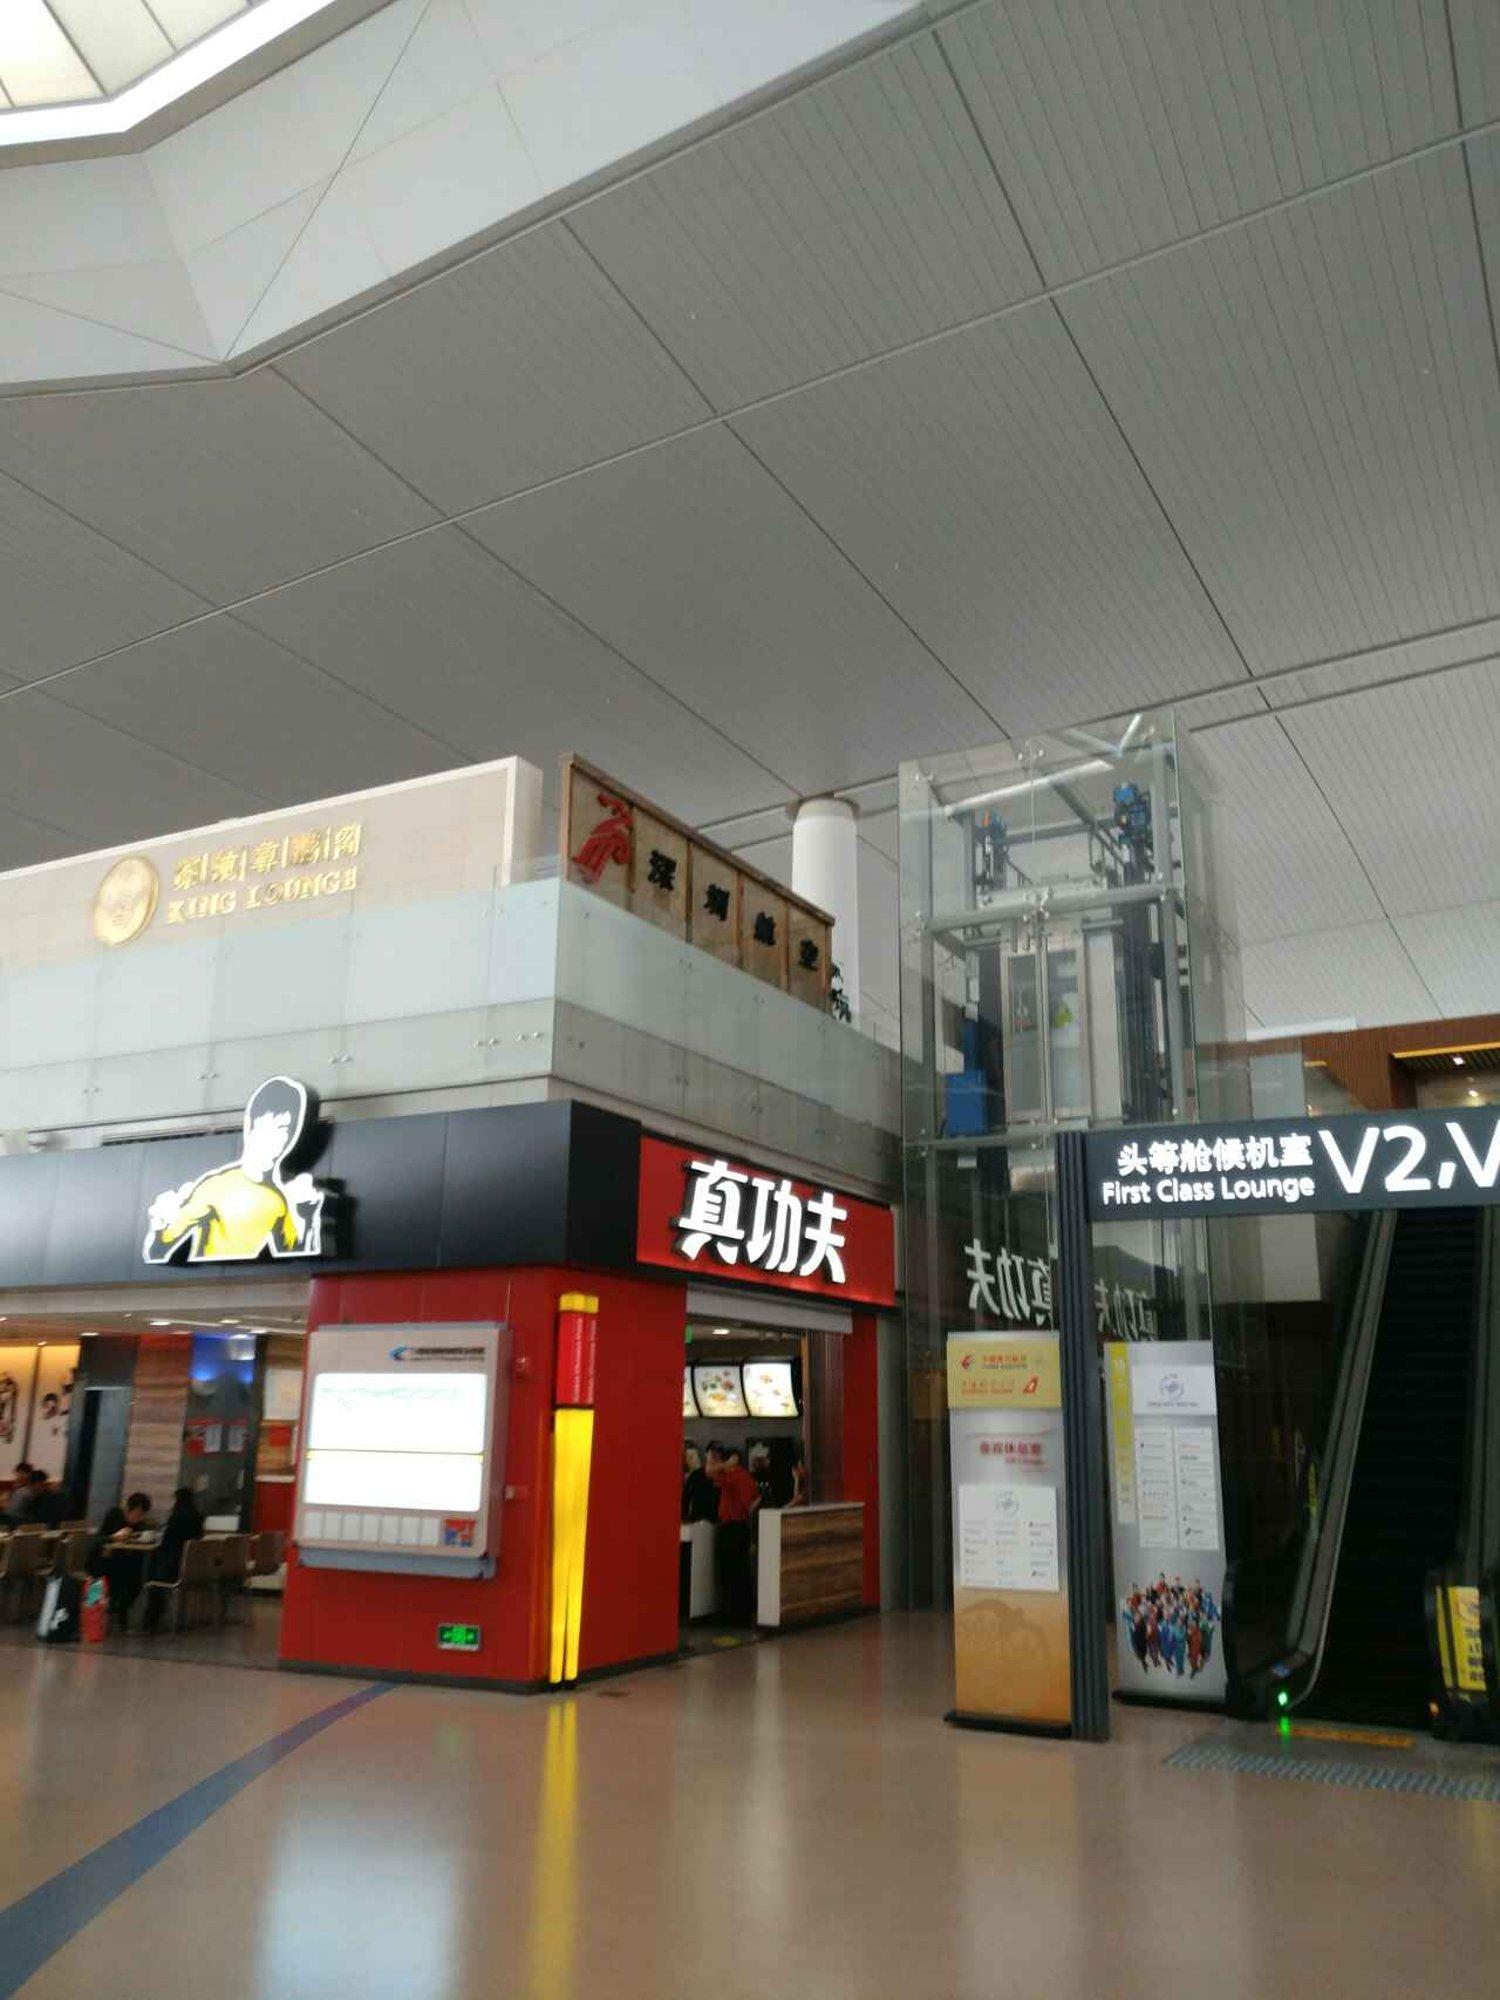 V2 Shenzhen Airlines King Lounge image 1 of 4